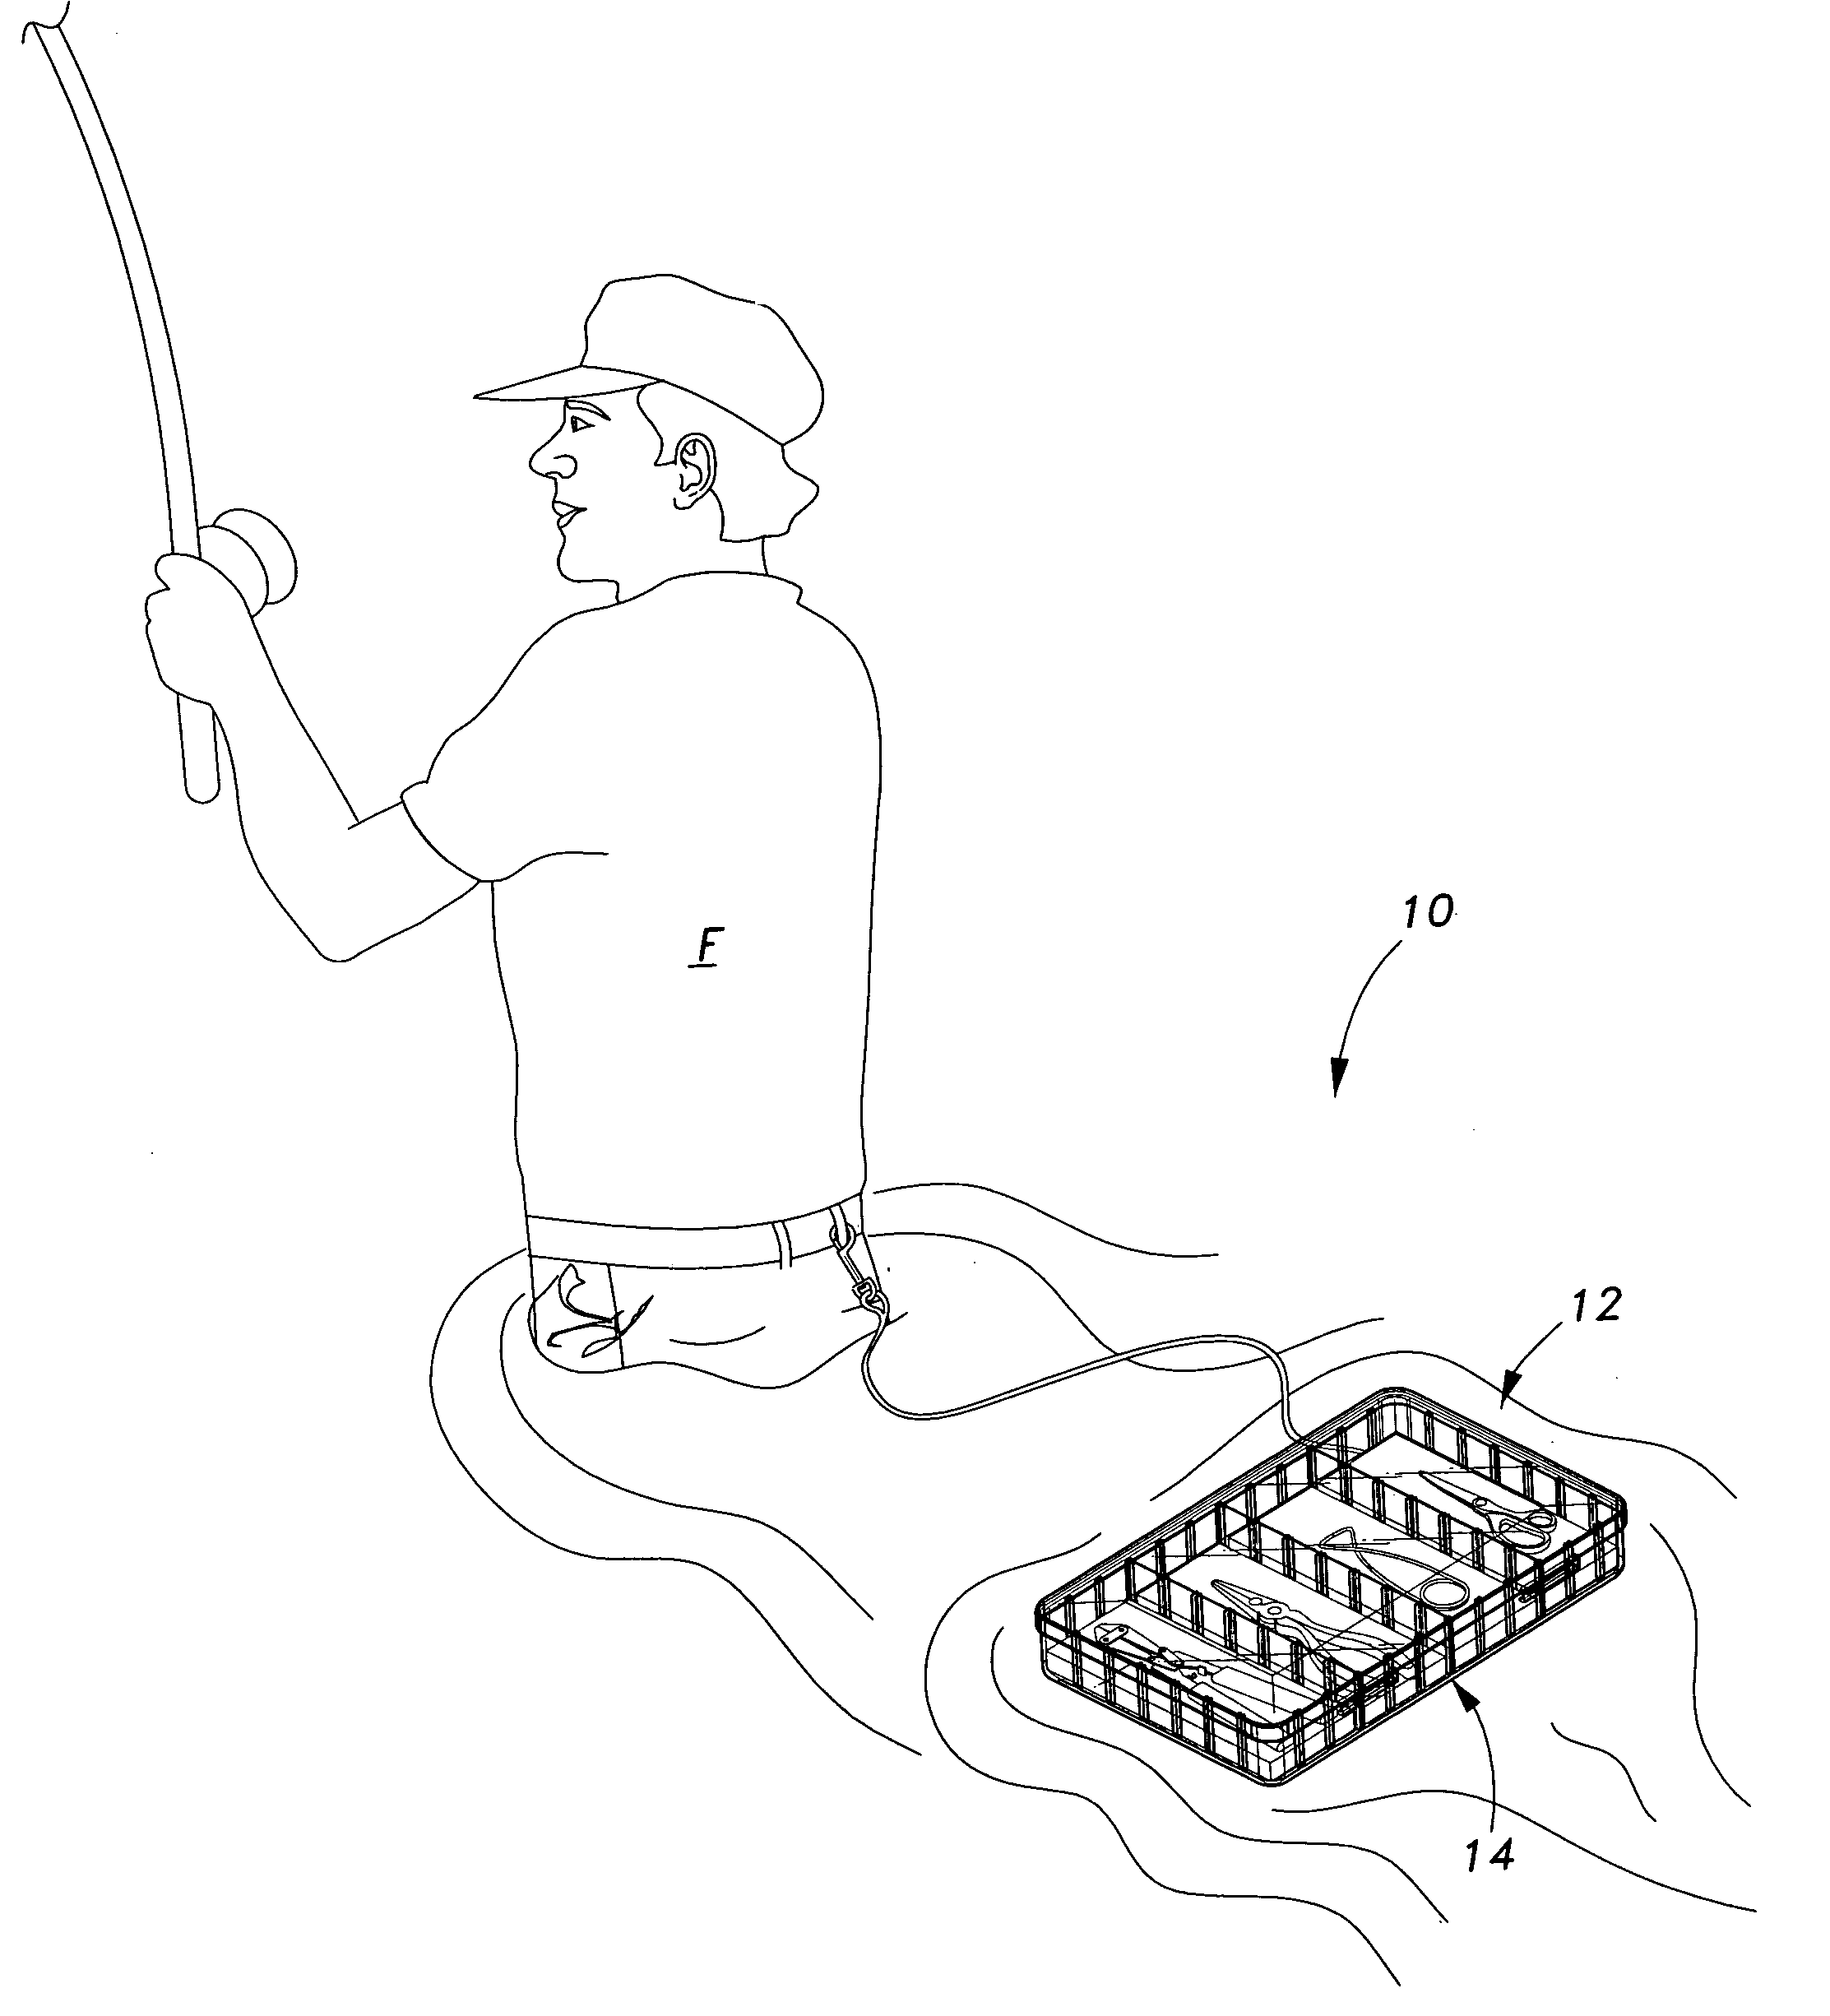 Tool kit for fishing